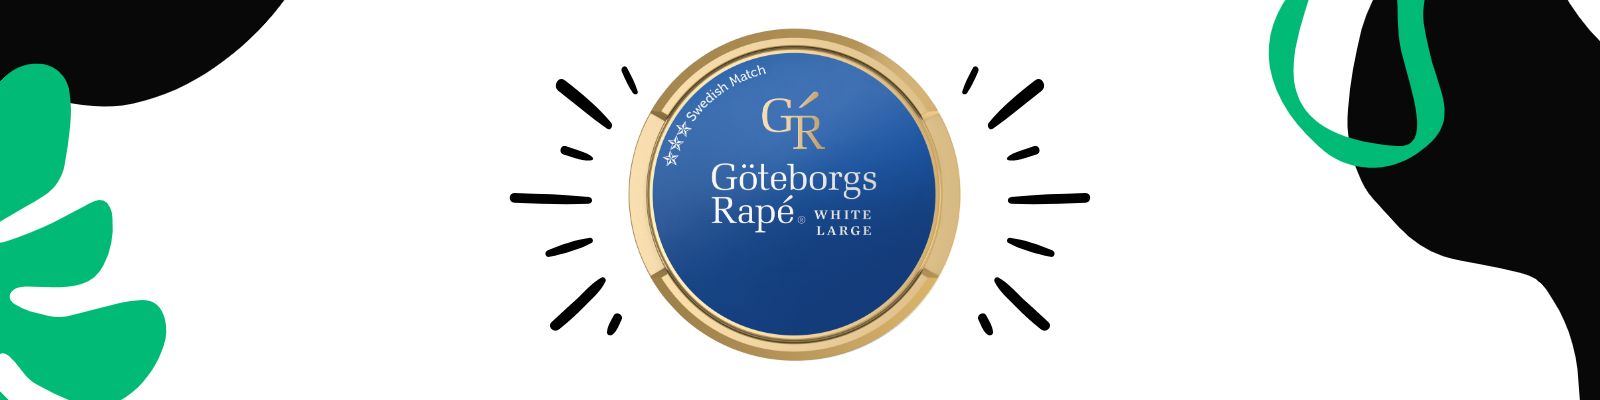 Göteborgs rape